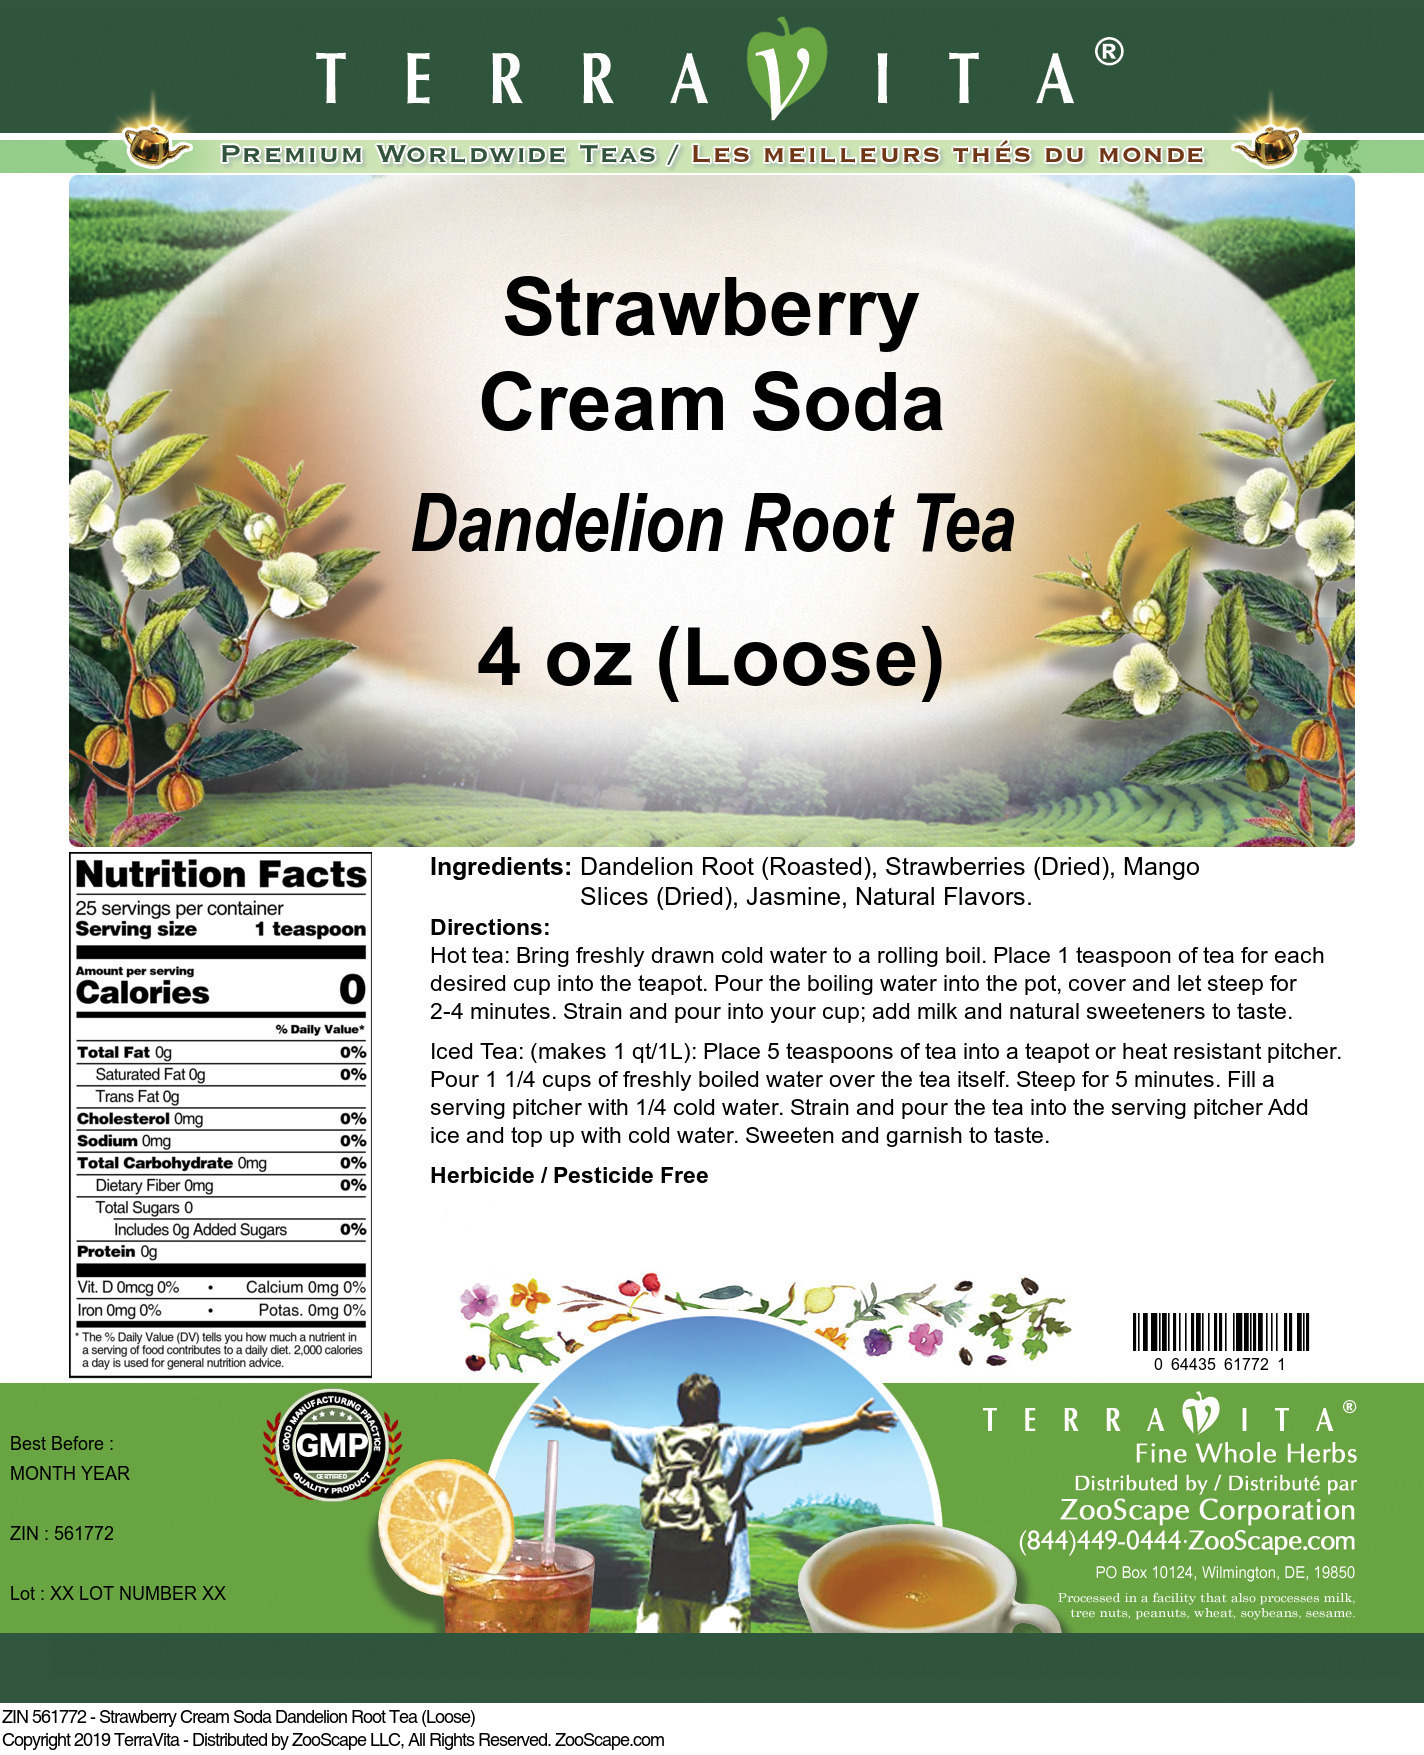 Strawberry Cream Soda Dandelion Root Tea (Loose) - Label